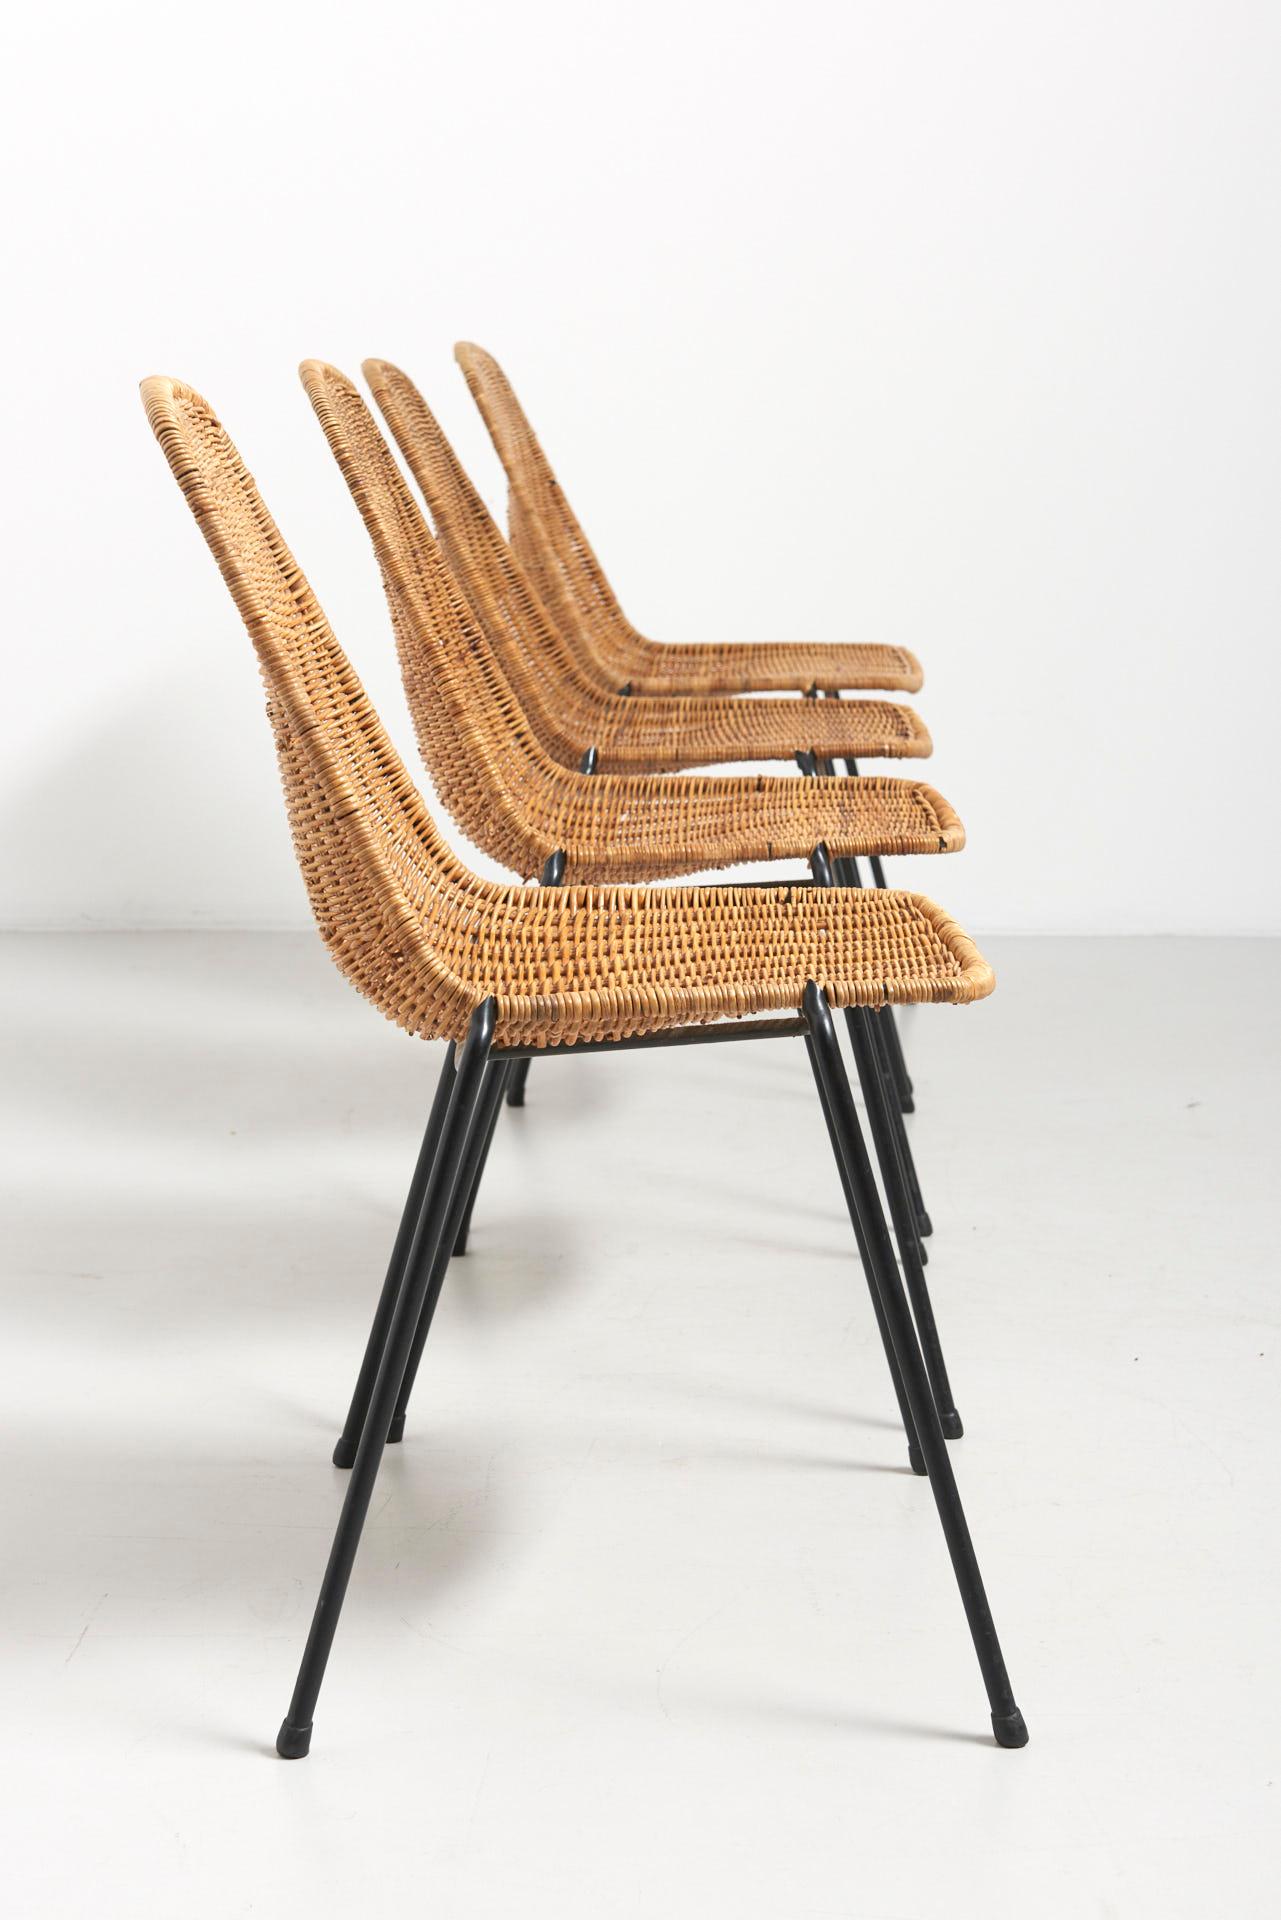 Set Rattan Dining Chairs, Gian Franco Legler 2